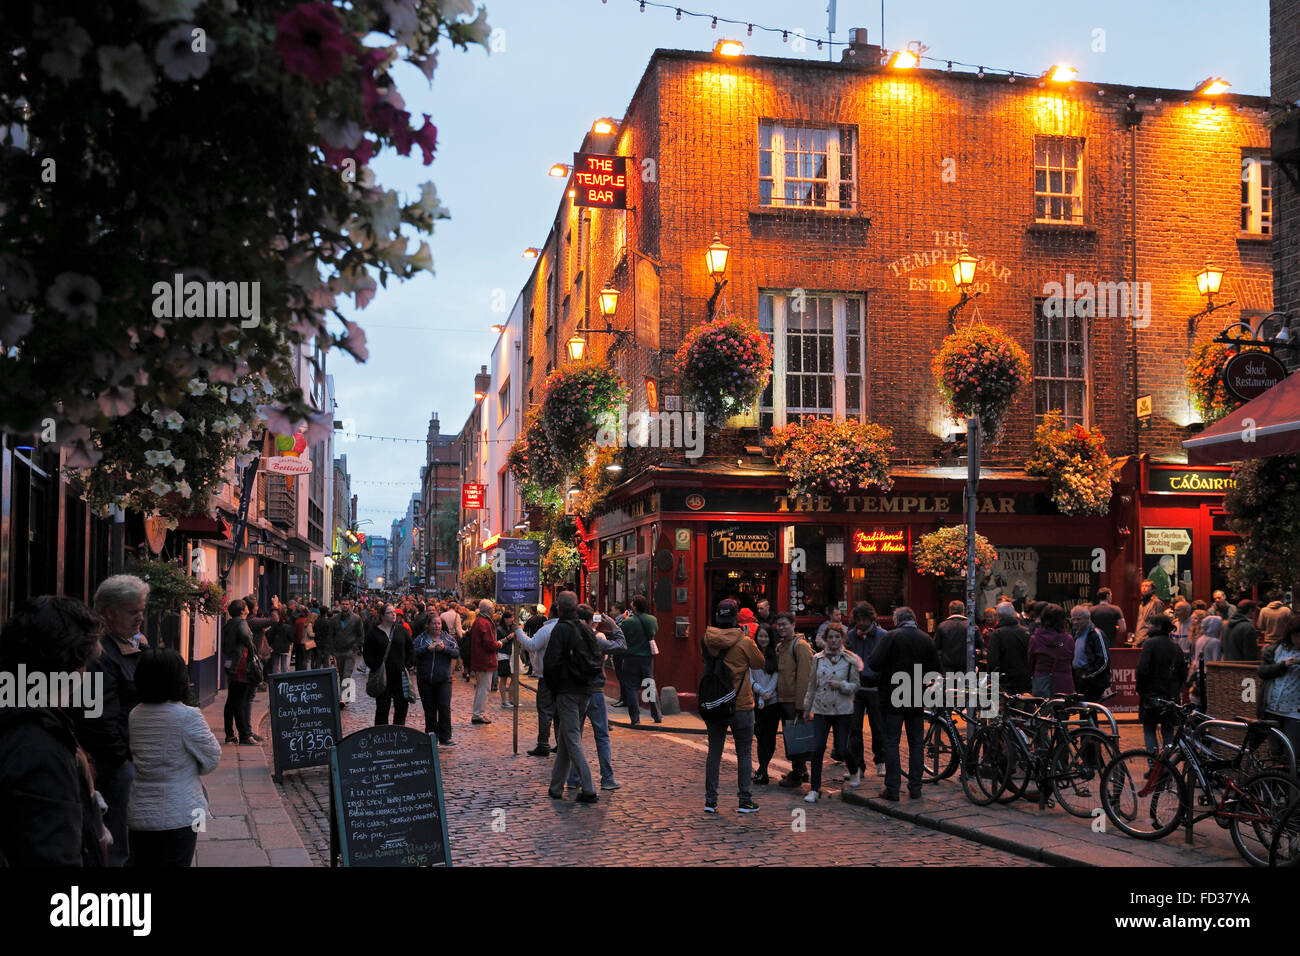 The Temple Bar in Dublin Stock Photo